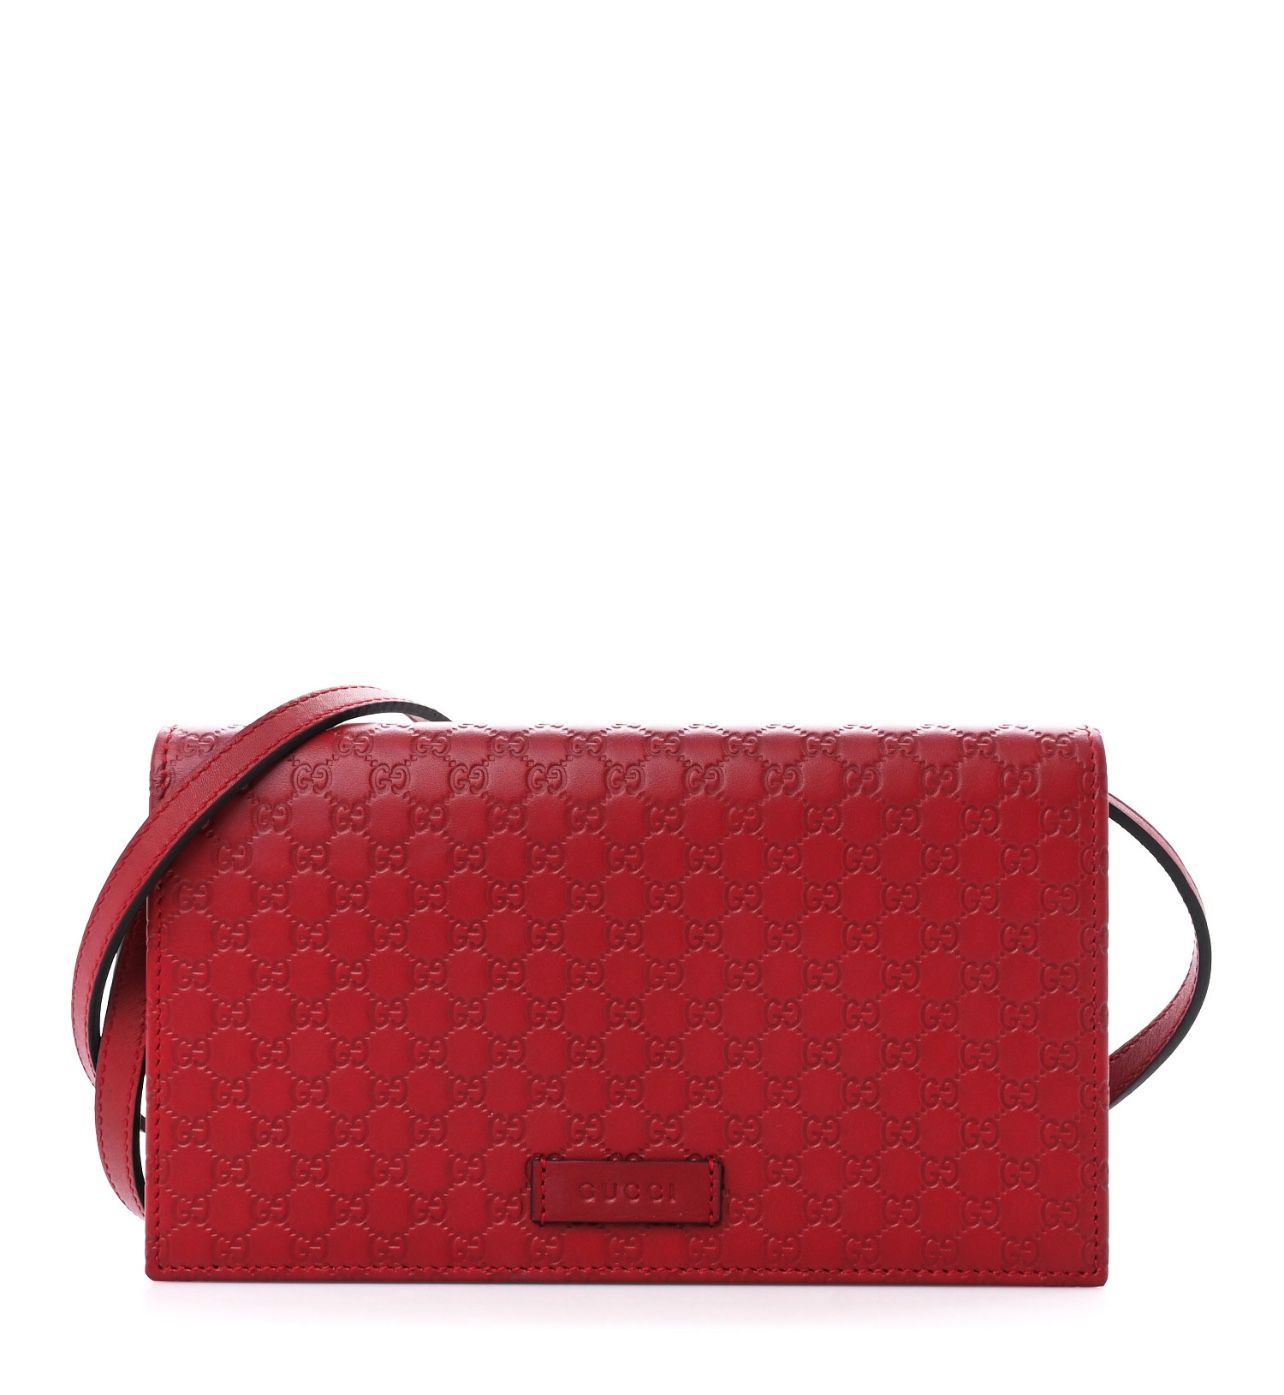 Red Gucci Crossbody Bag 